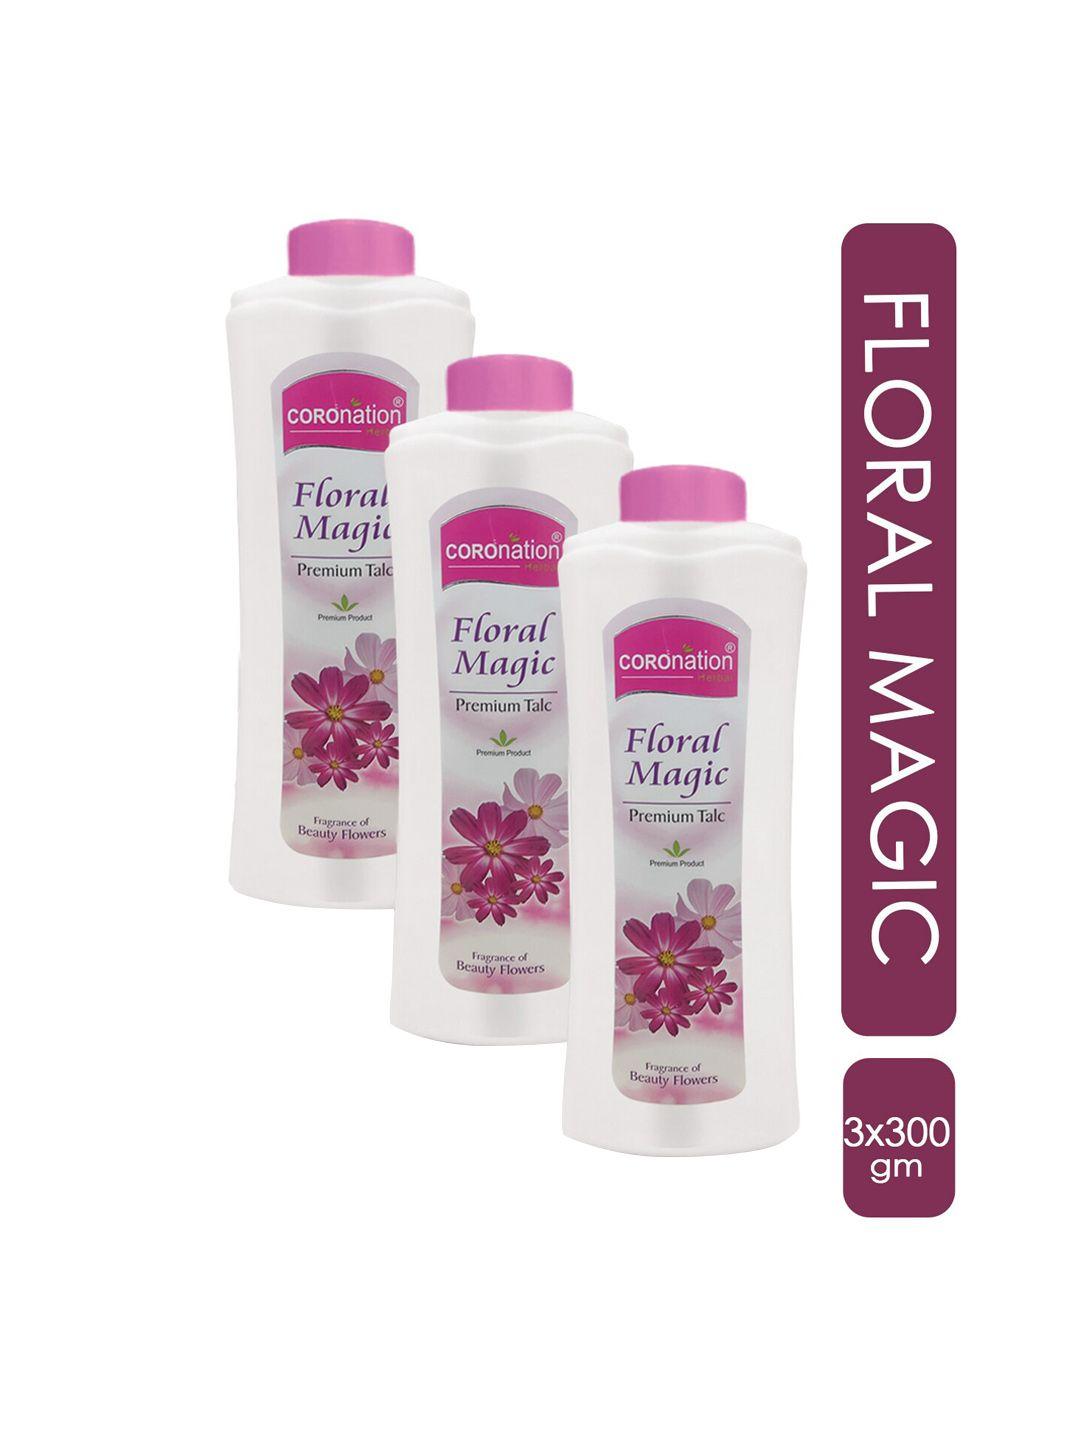 coronation herbal set of 3 floral magic premium talc powders - 300g each